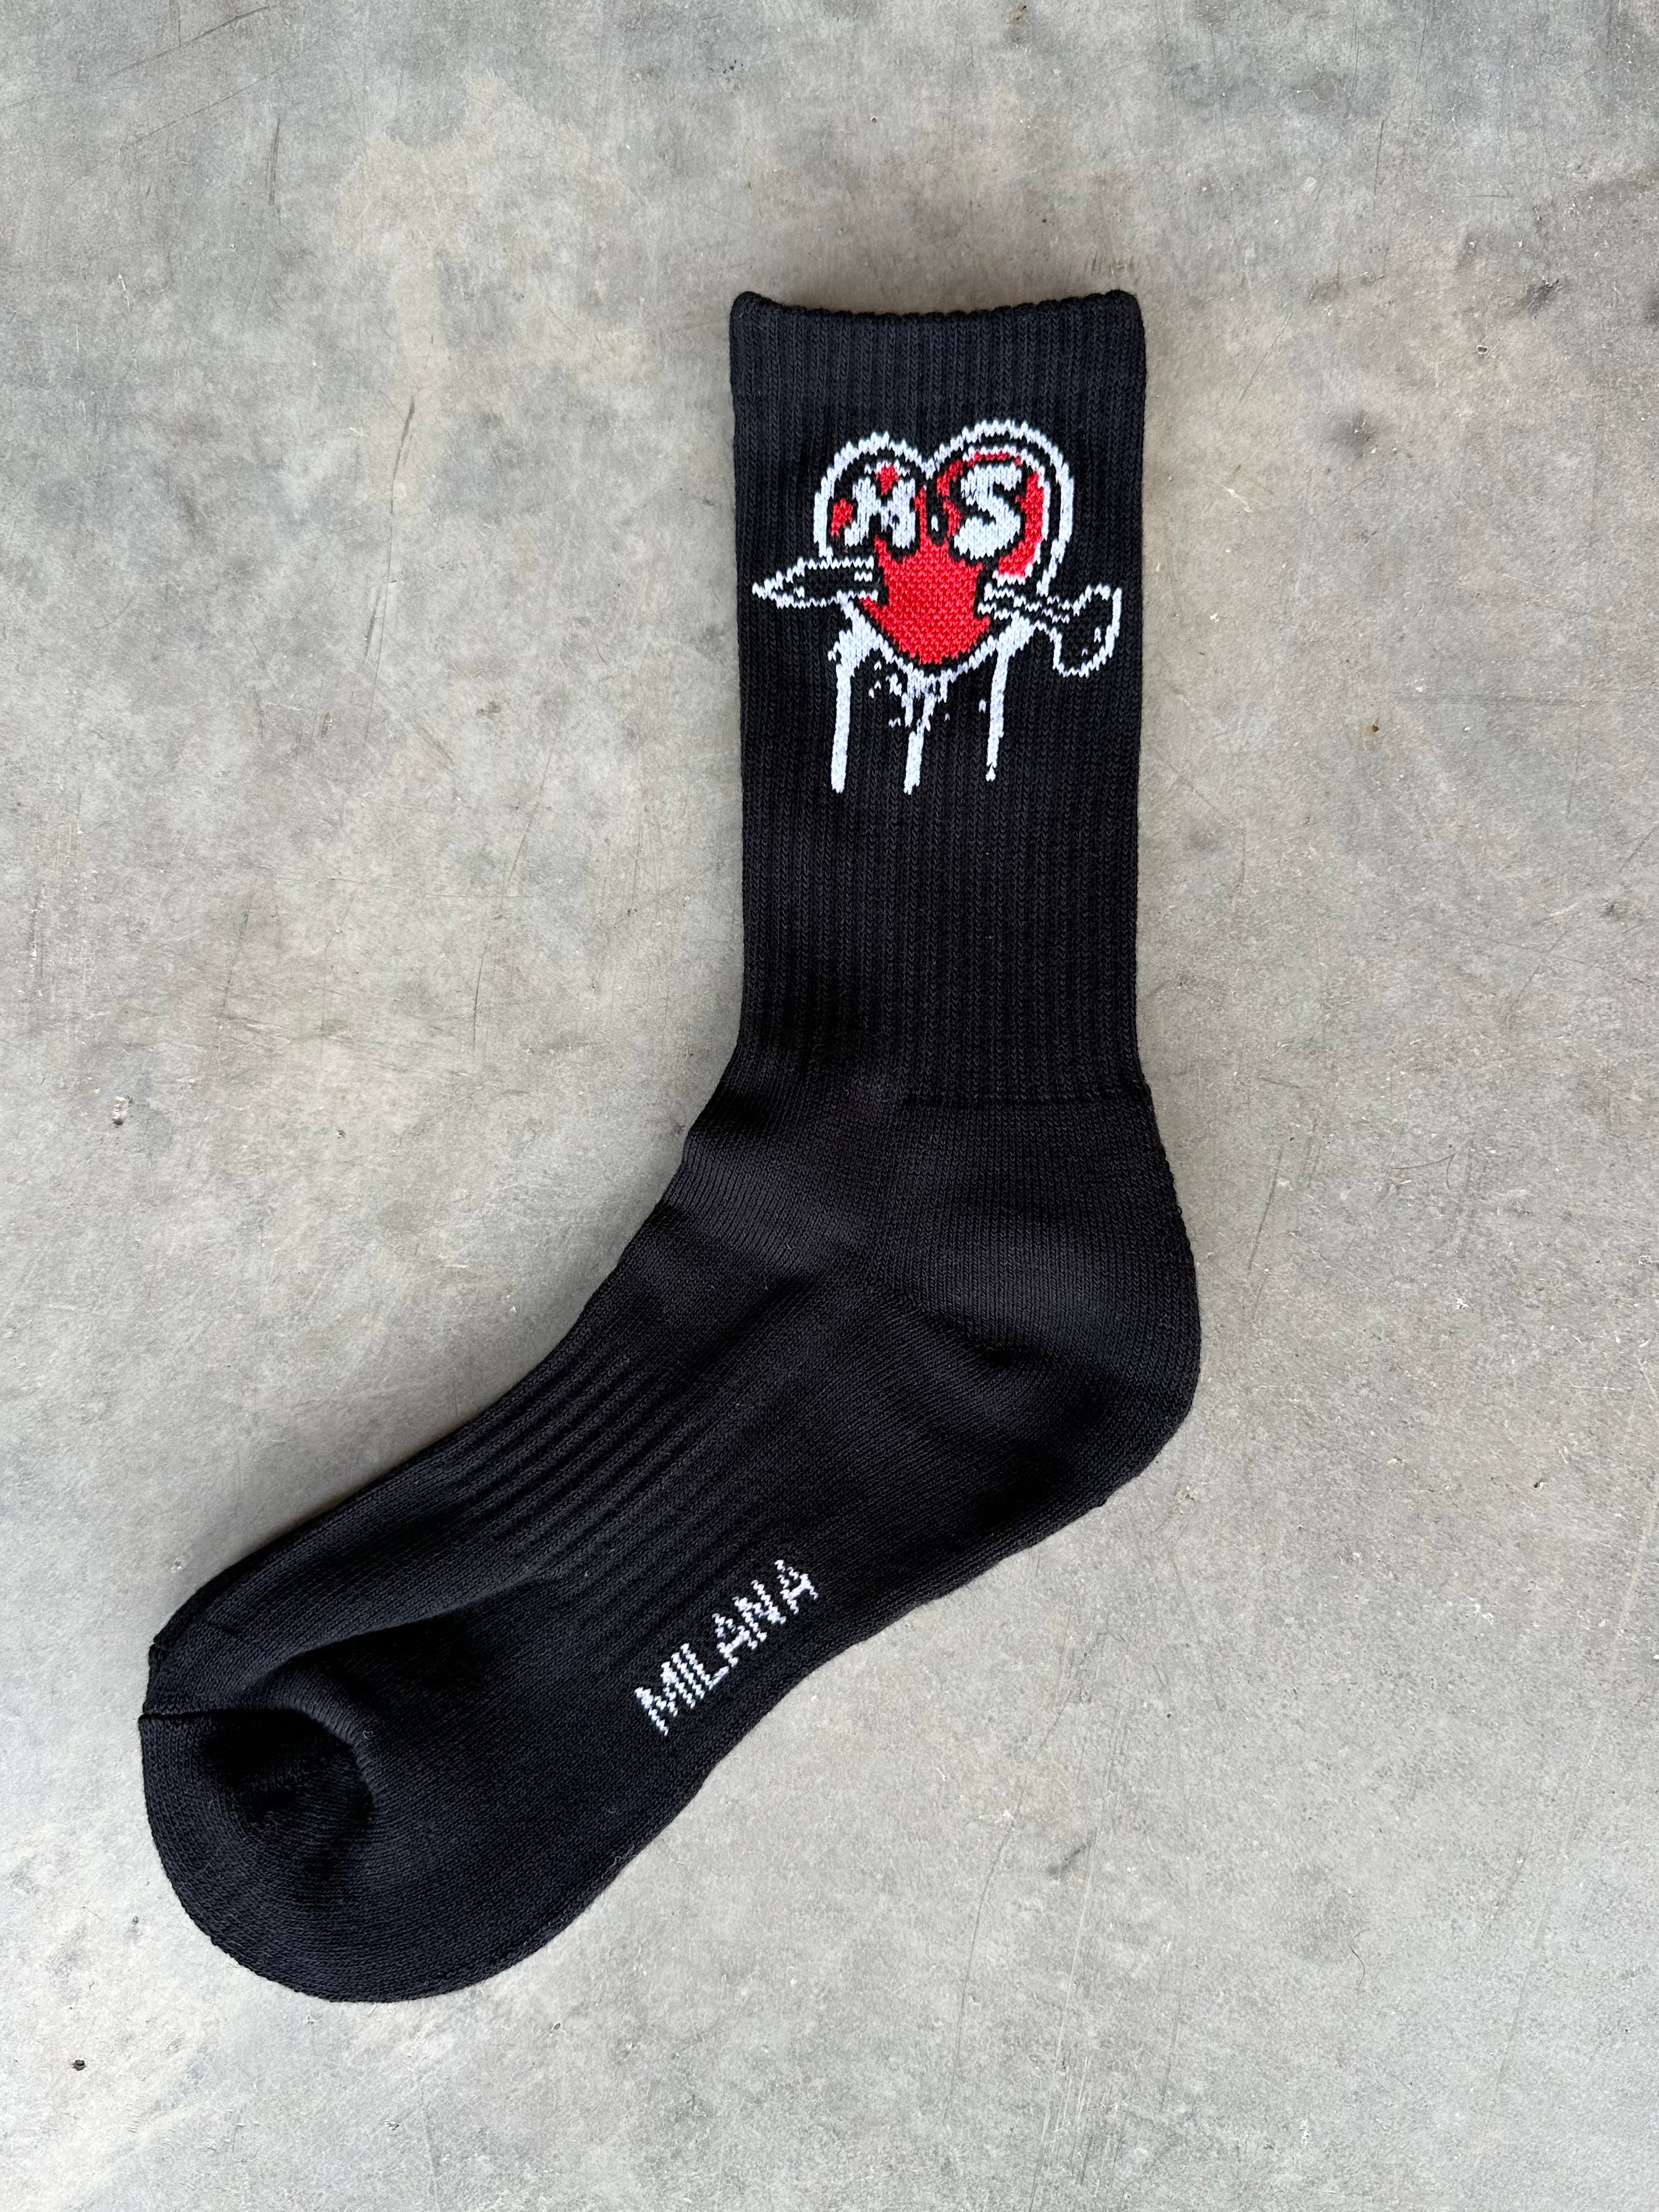 Black Milana MS Heart Socks.